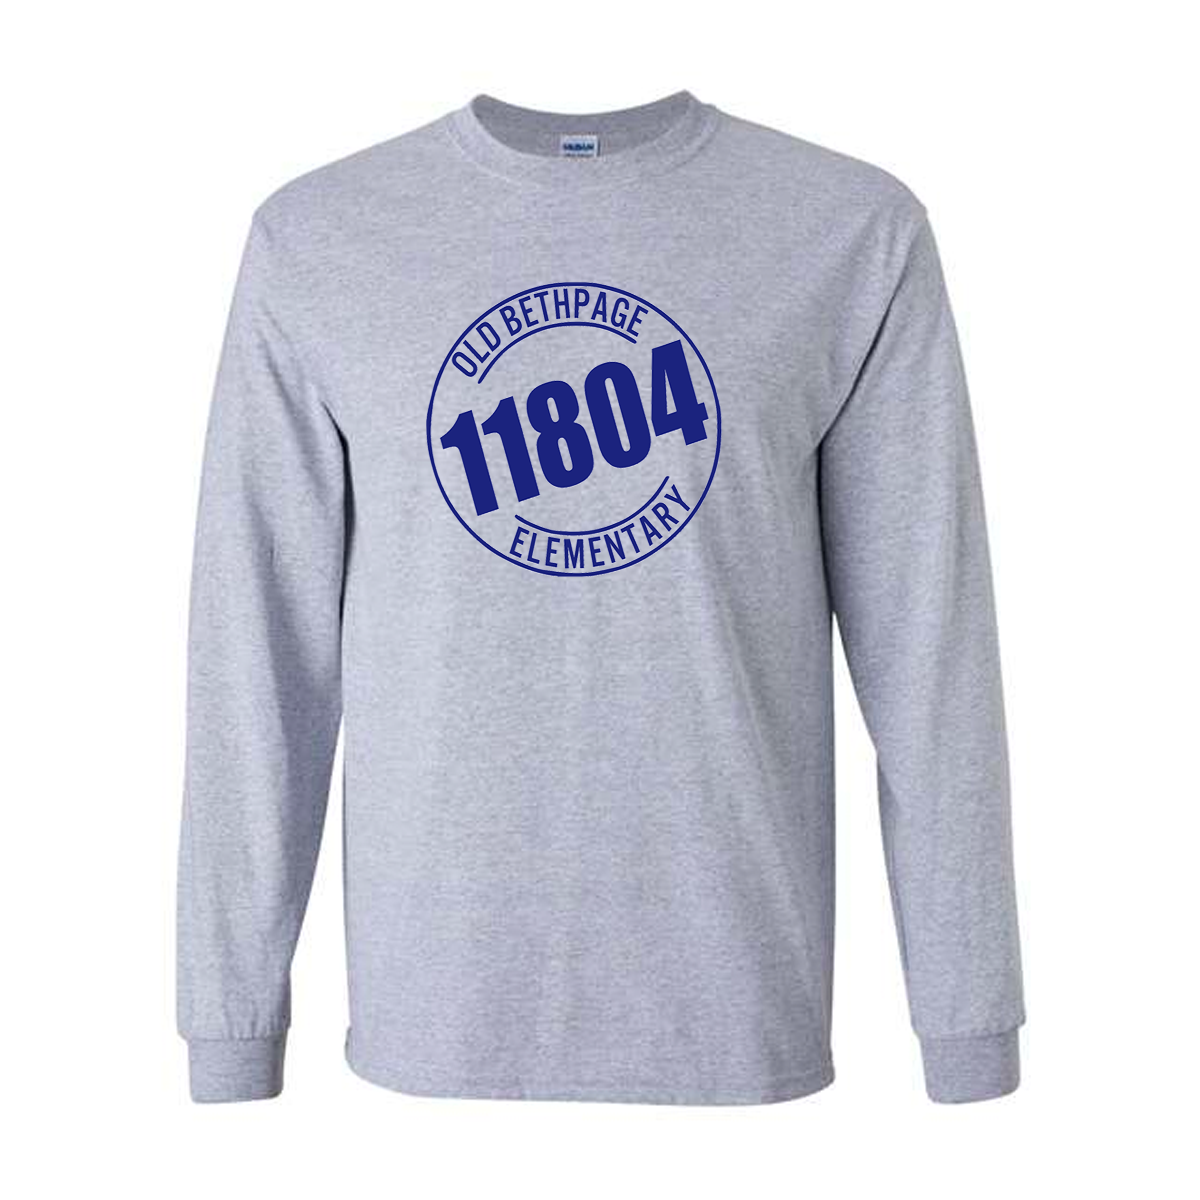 Old Bethpage 11804 Circle Long Sleeve T-Shirt